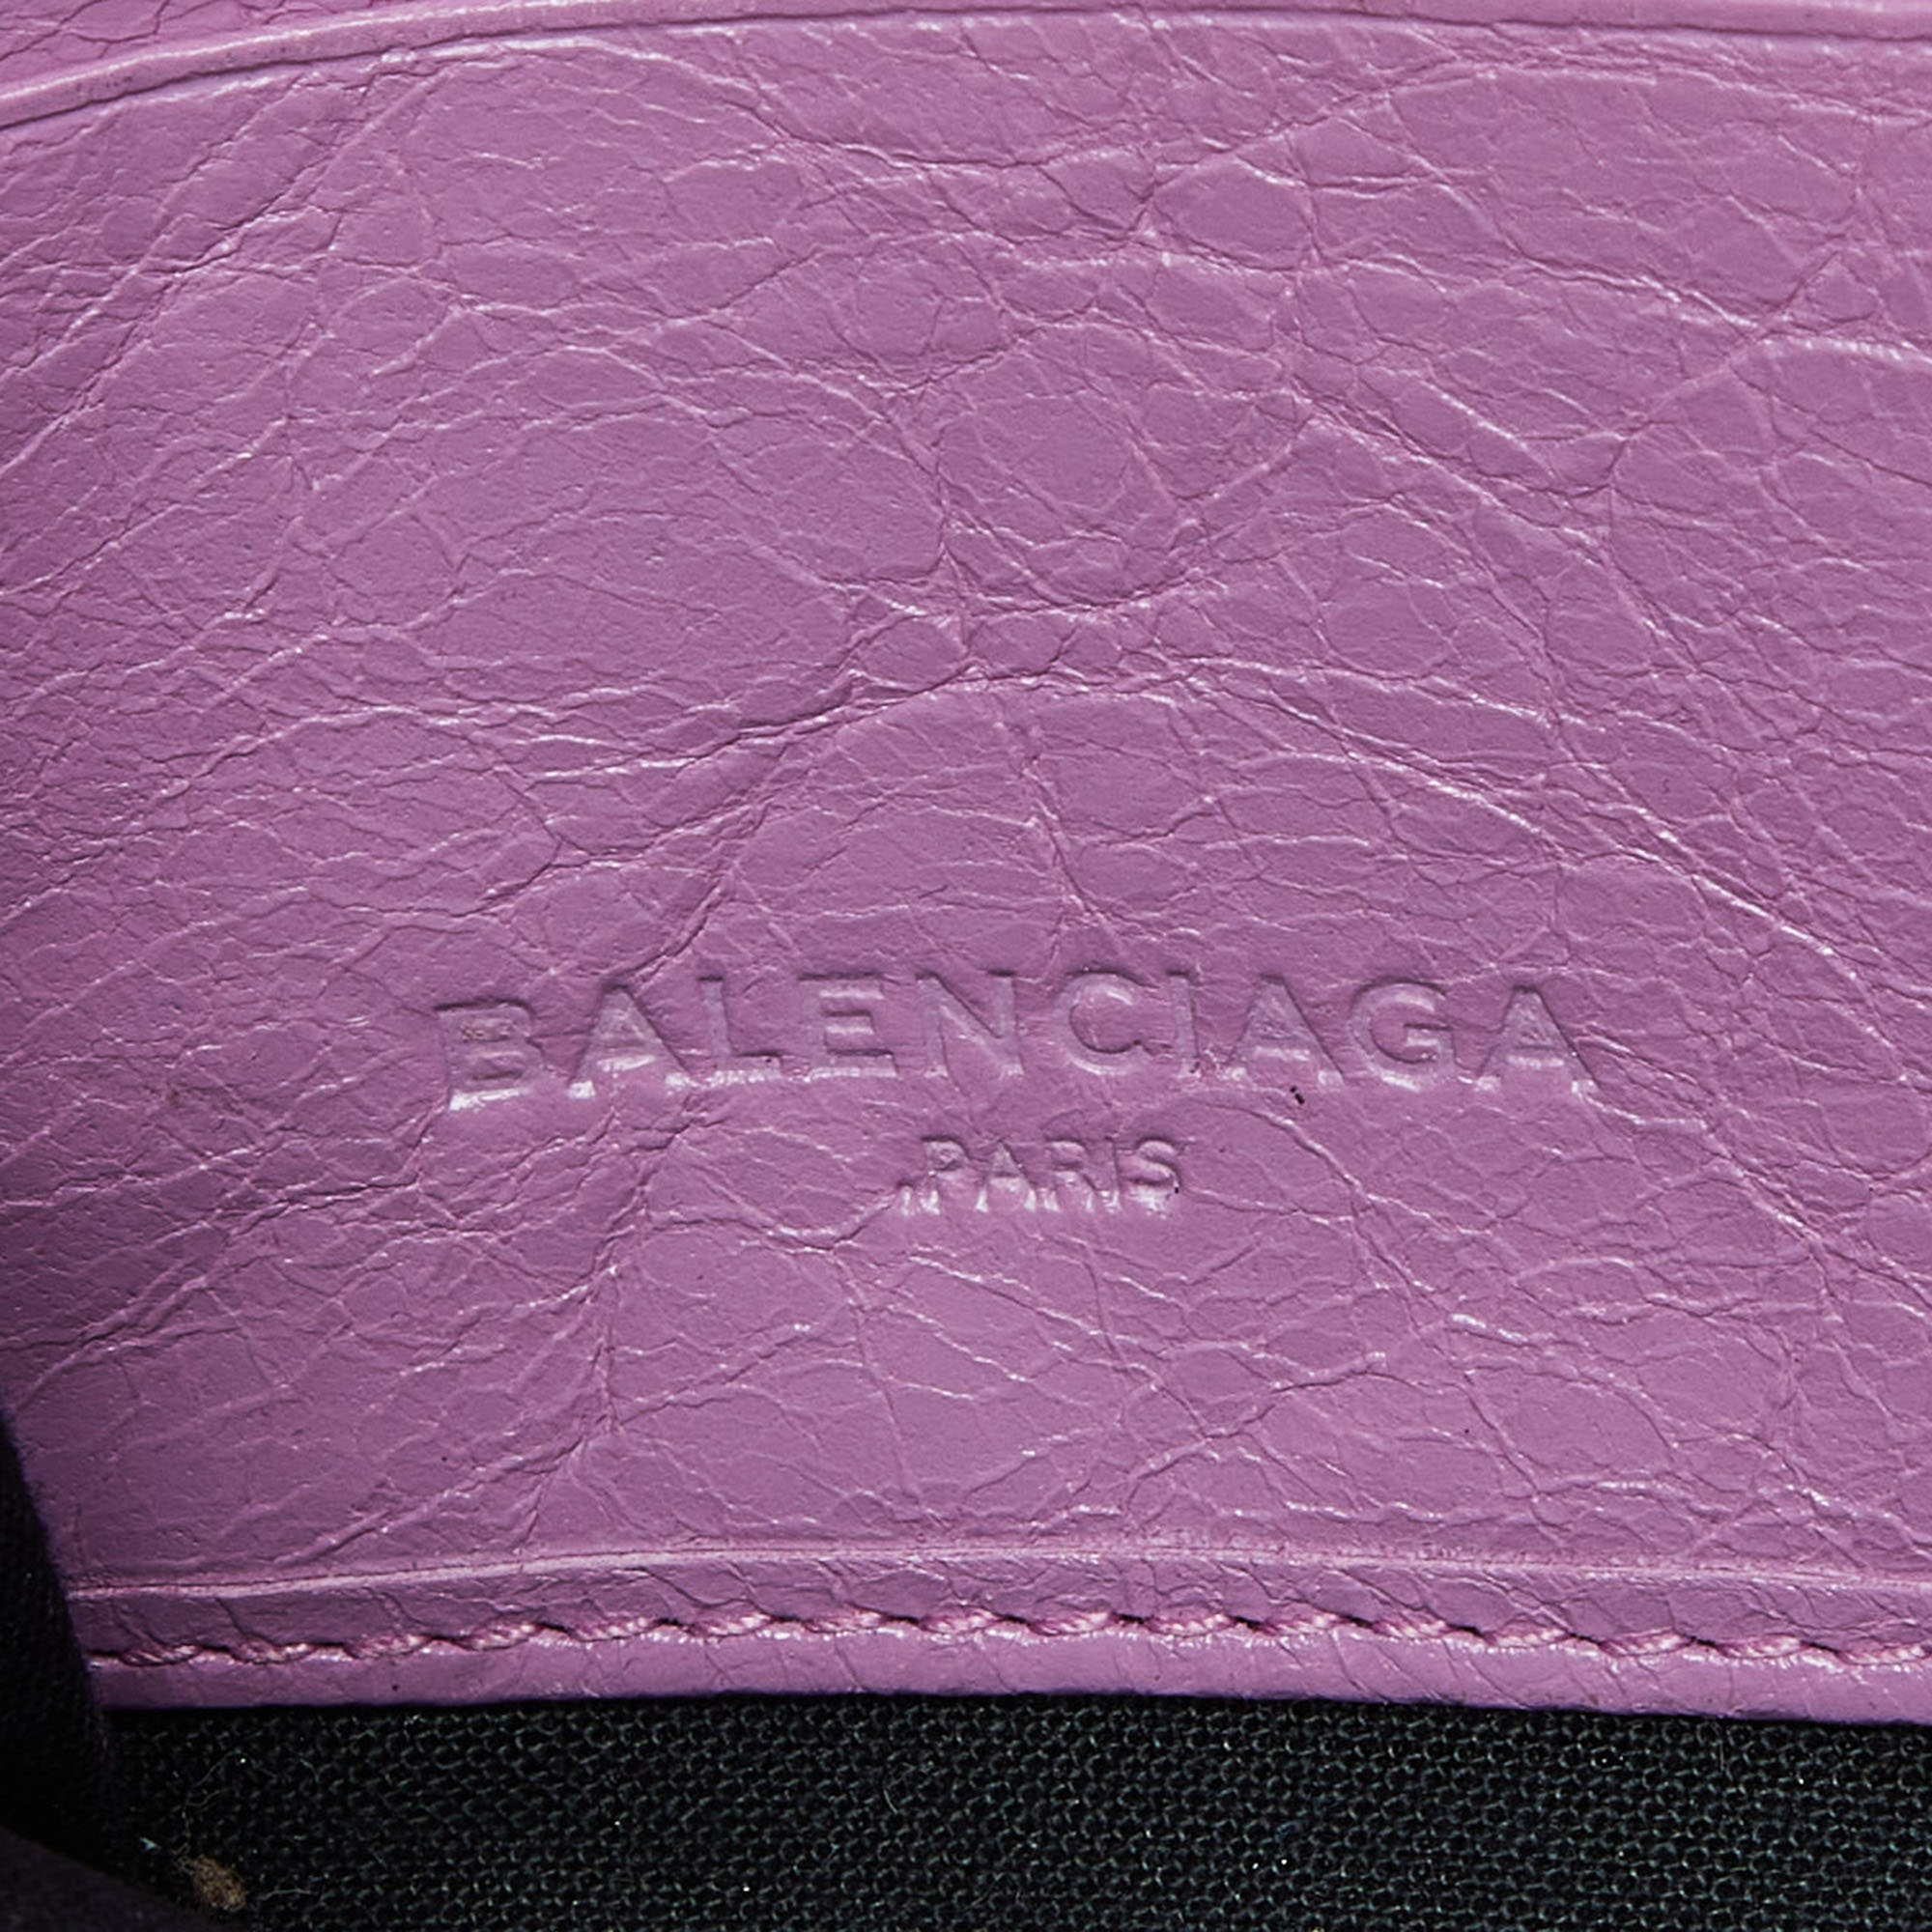 Balenciaga Pink Leather City Zip Around Wallet